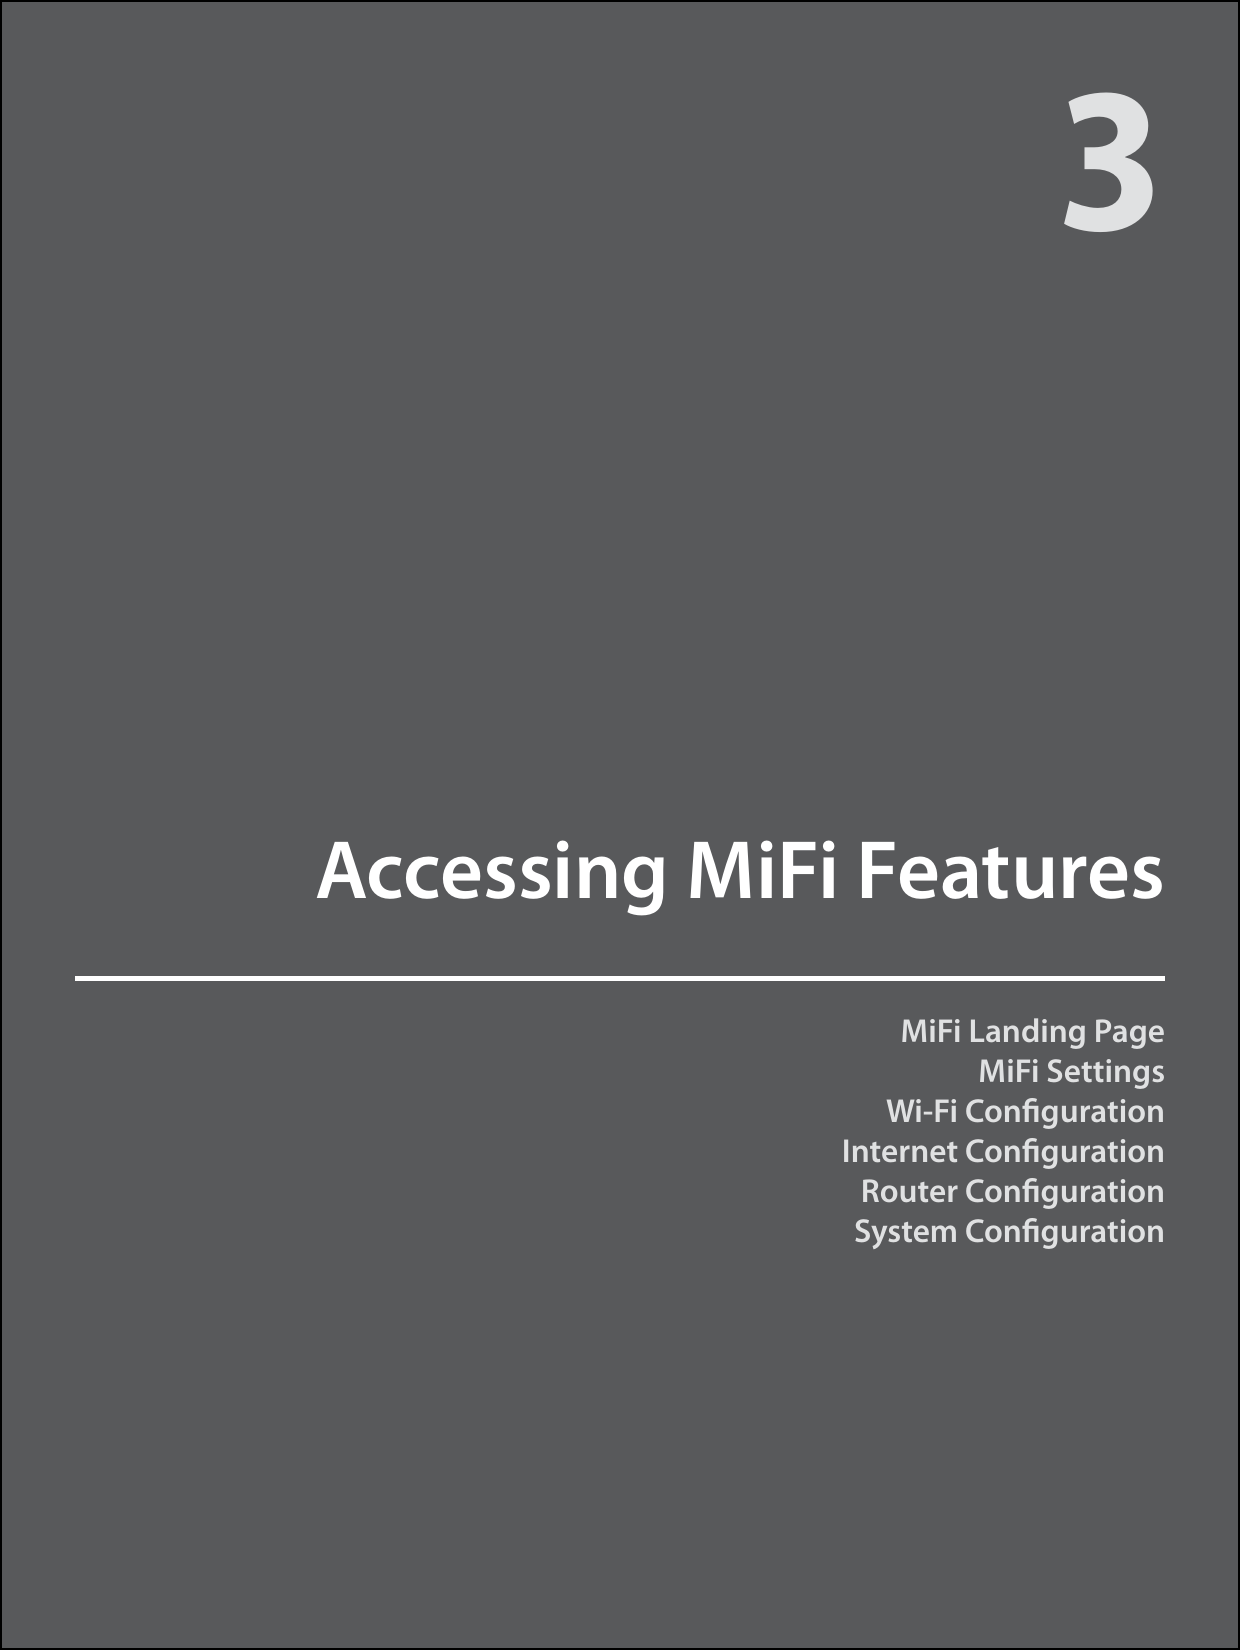 MiFi Landing Page MiFi SettingsWi-Fi CongurationInternet CongurationRouter CongurationSystem CongurationAccessing MiFi Features3